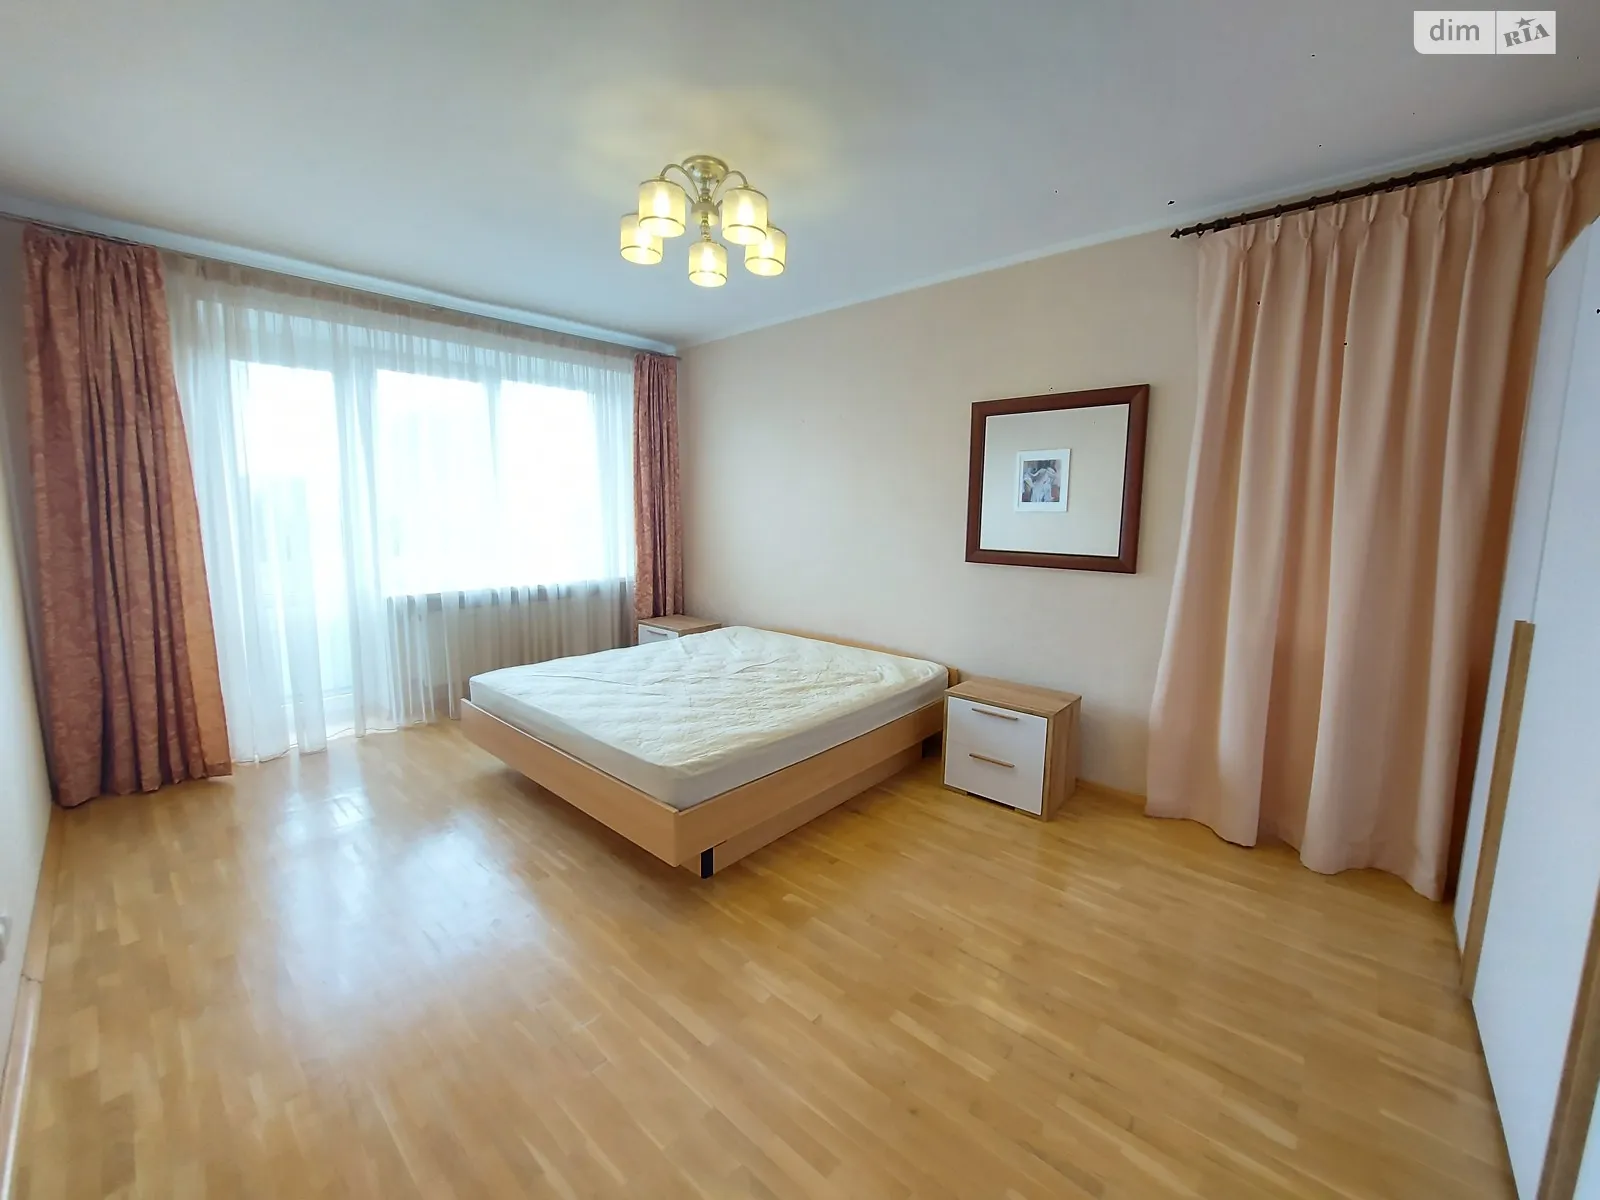 3-кімнатна квартира 75 кв. м у Тернополі, цена: 300 $ - фото 1